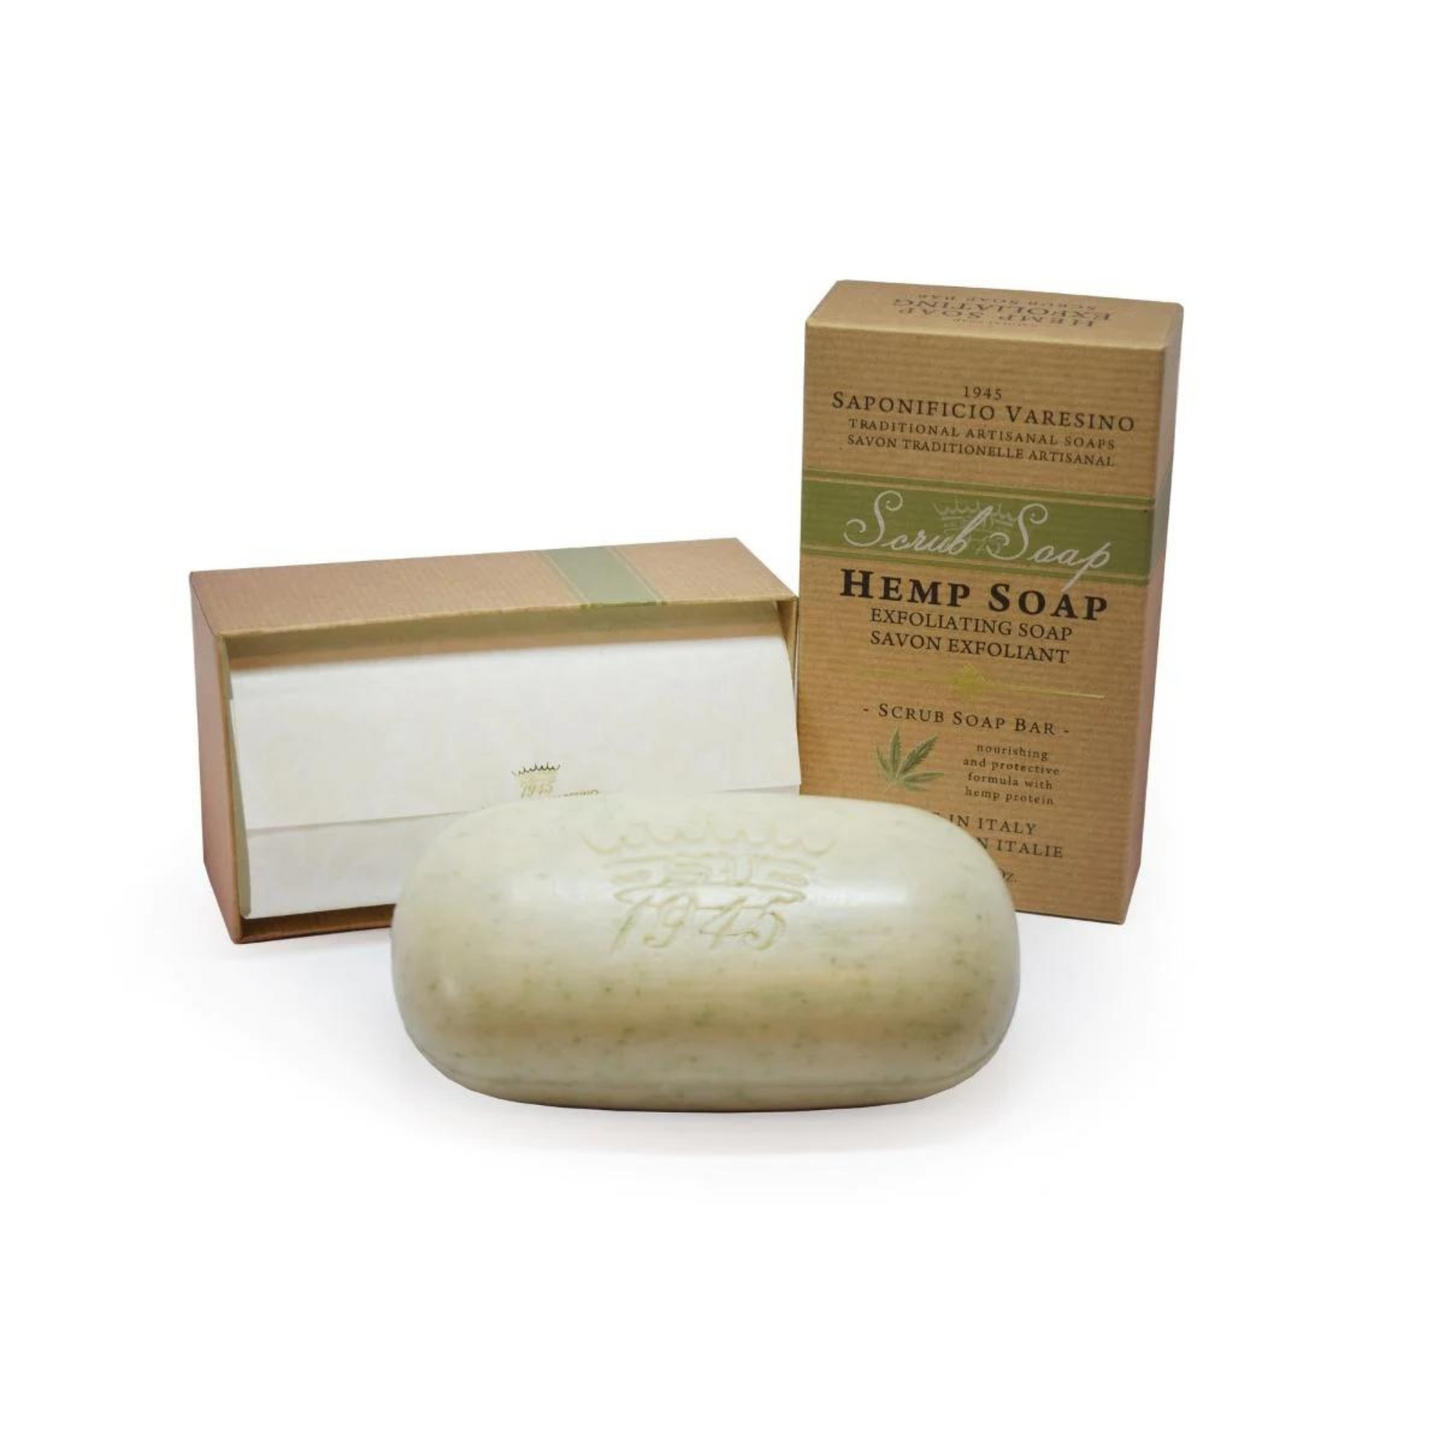 Primary Image of Saponificio Varesino Hemp Soap (300 g)